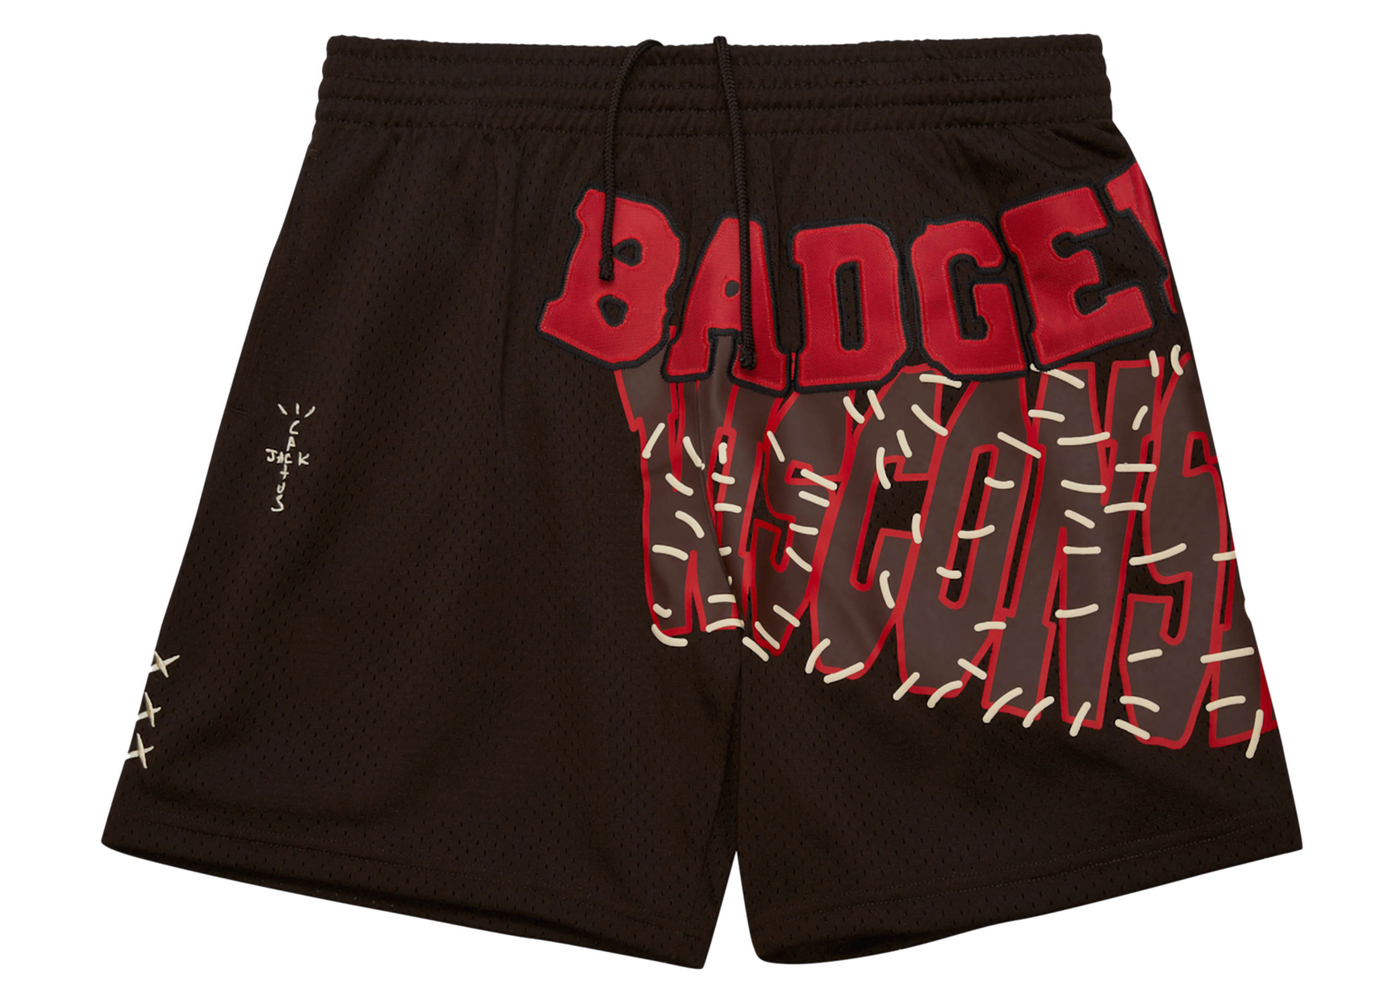 Travis Scott x Mitchell & Ness Wisconsin Badgers Basketball Shorts 